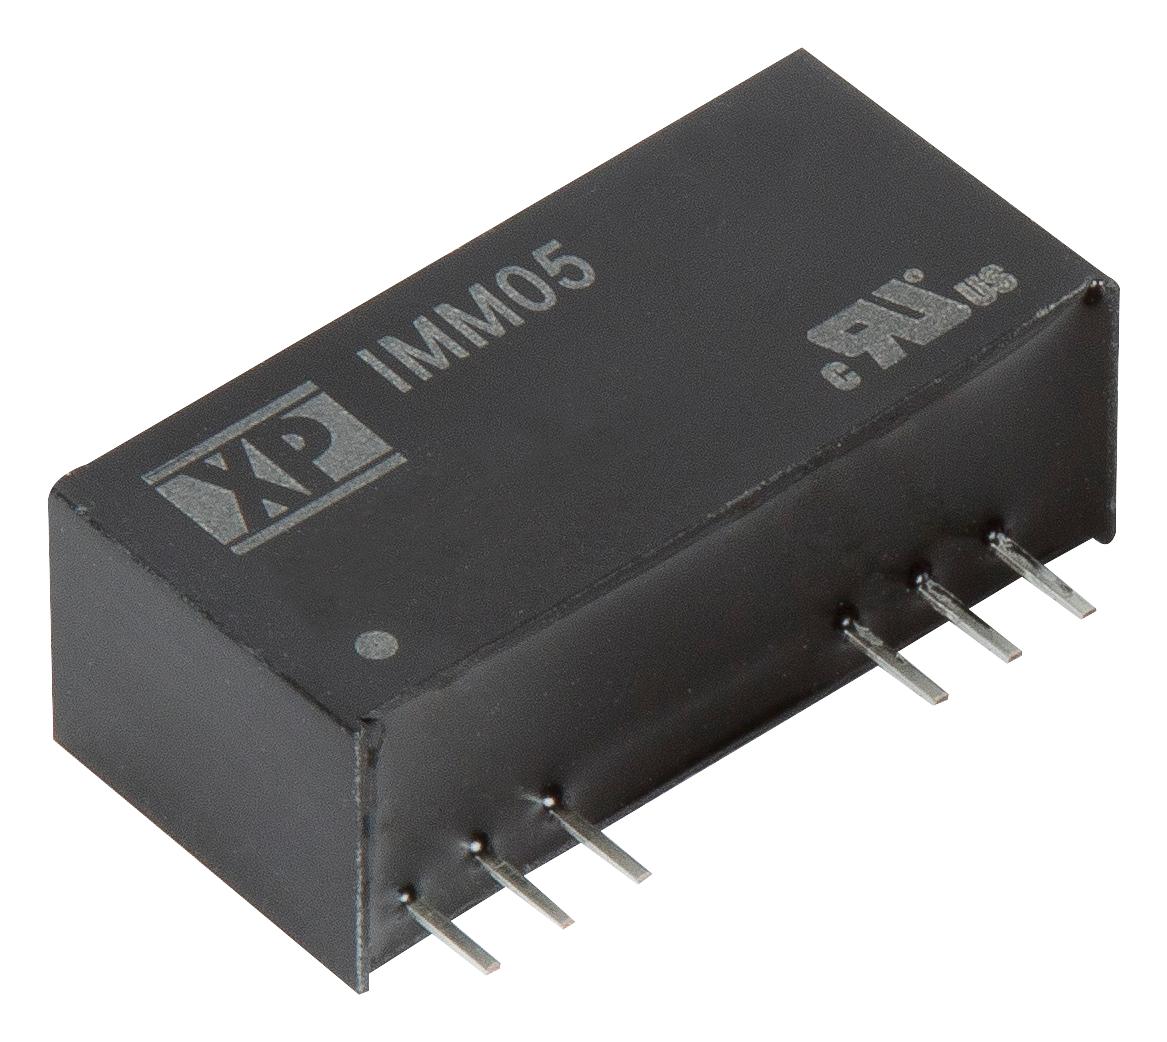 IMM0512D12 DC-DC CONVERTER, 2 O/P, 5W XP POWER